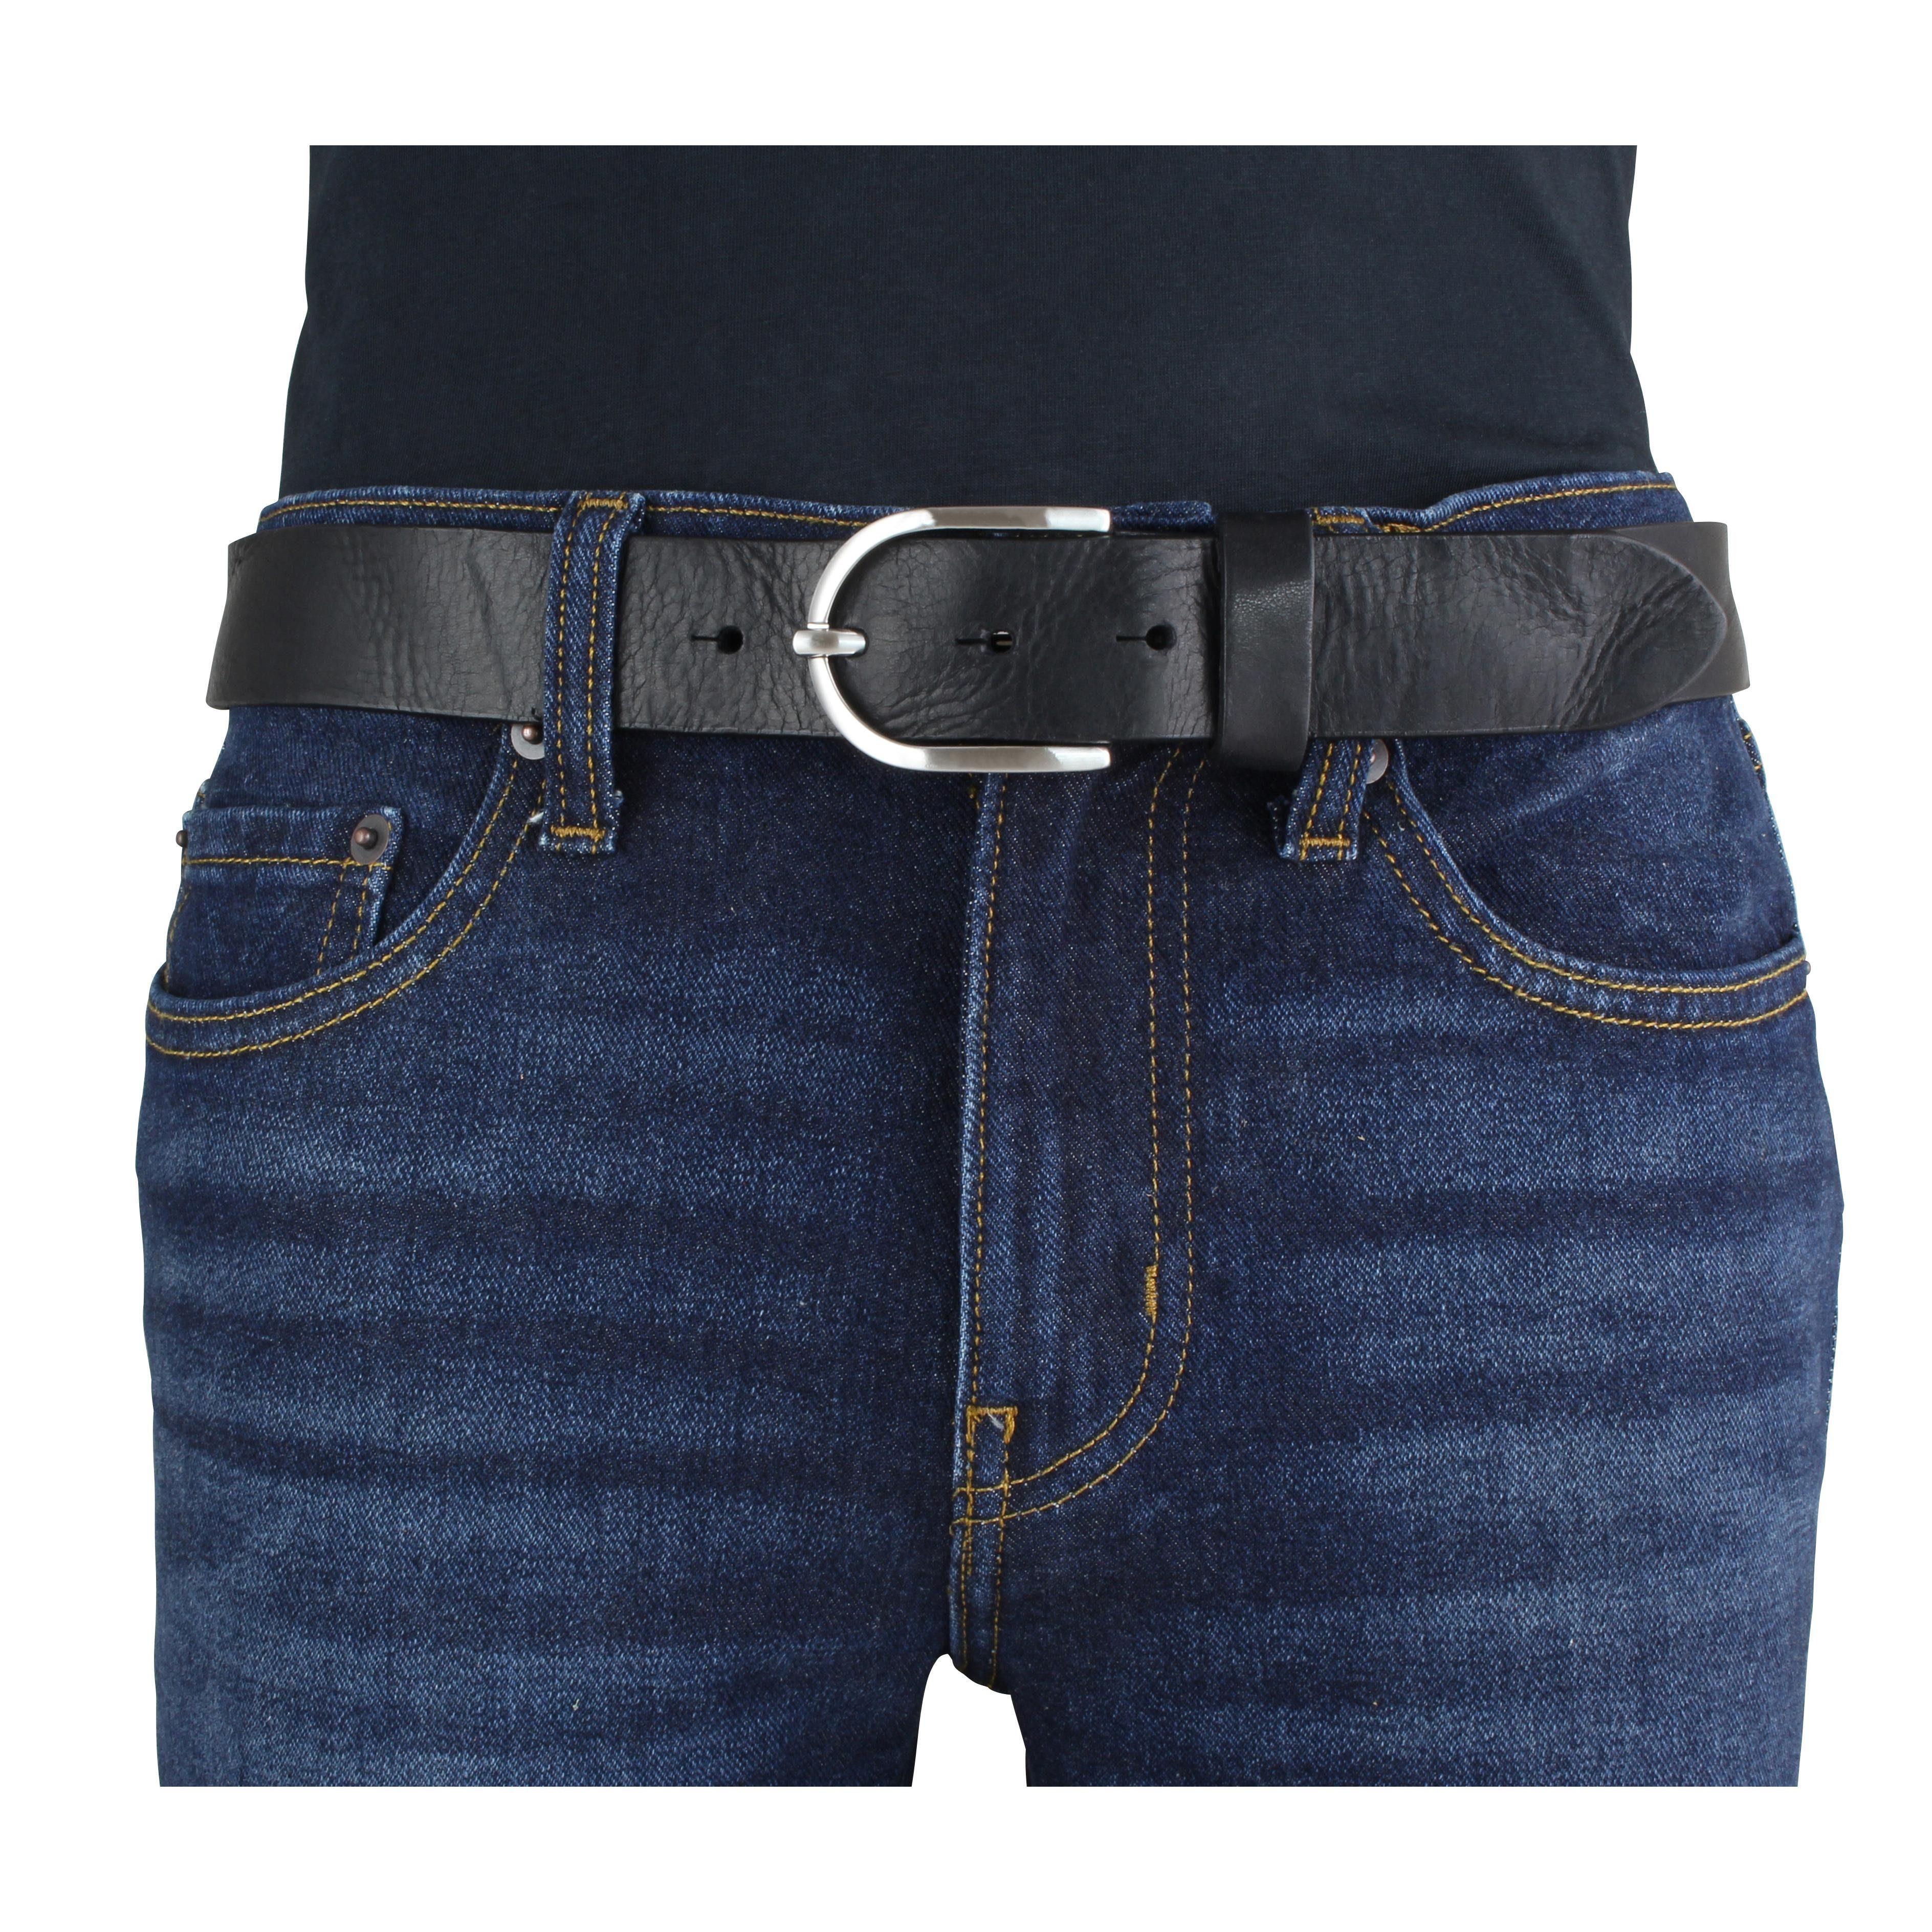 Damen-Gürtel 3,5 aus BELTINGER Used-Look Jeans-Gürtel Ledergürtel Dam Weiß, Vollrindleder - Silber für cm